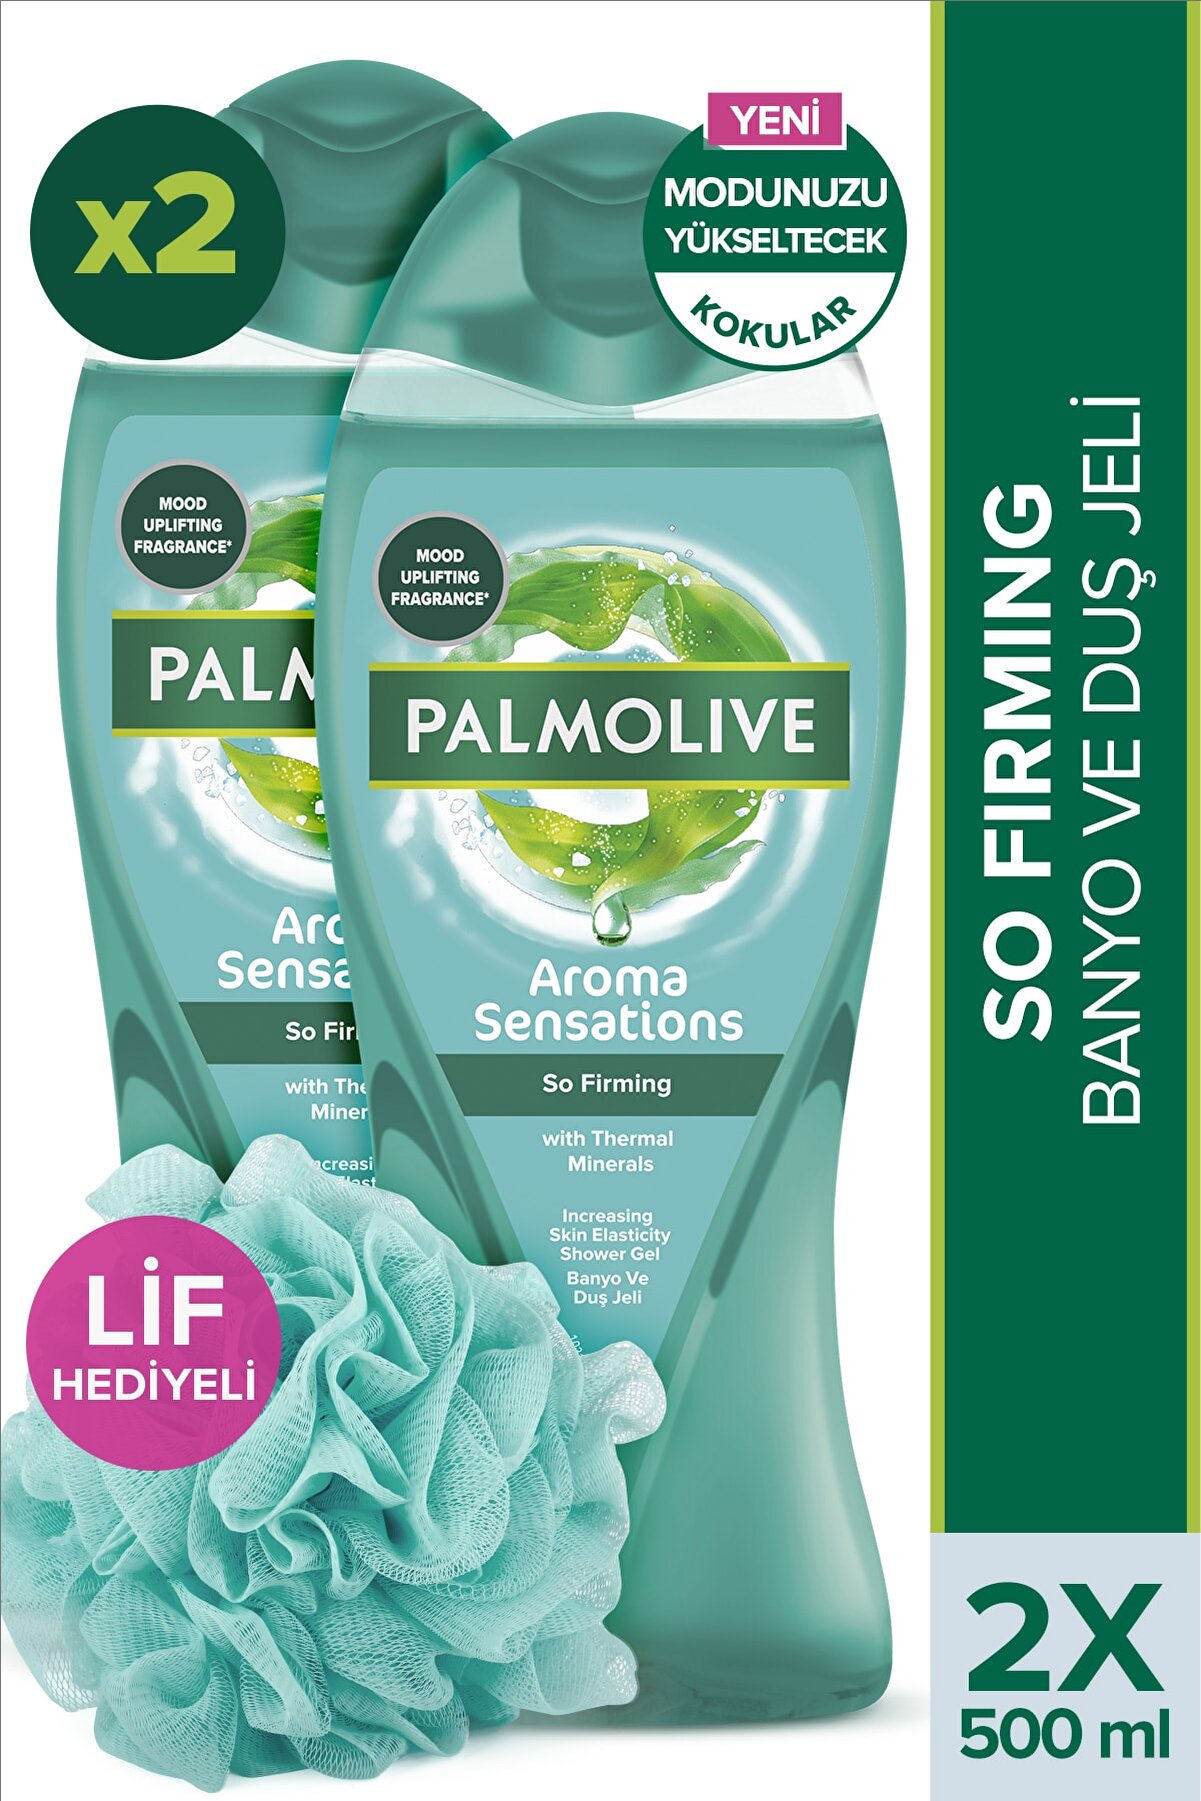 Palmolive Aroma Sensations So Firm Banyo ve Duş Jeli 500 ml x 2 Adet + Duş Lifi Hediye